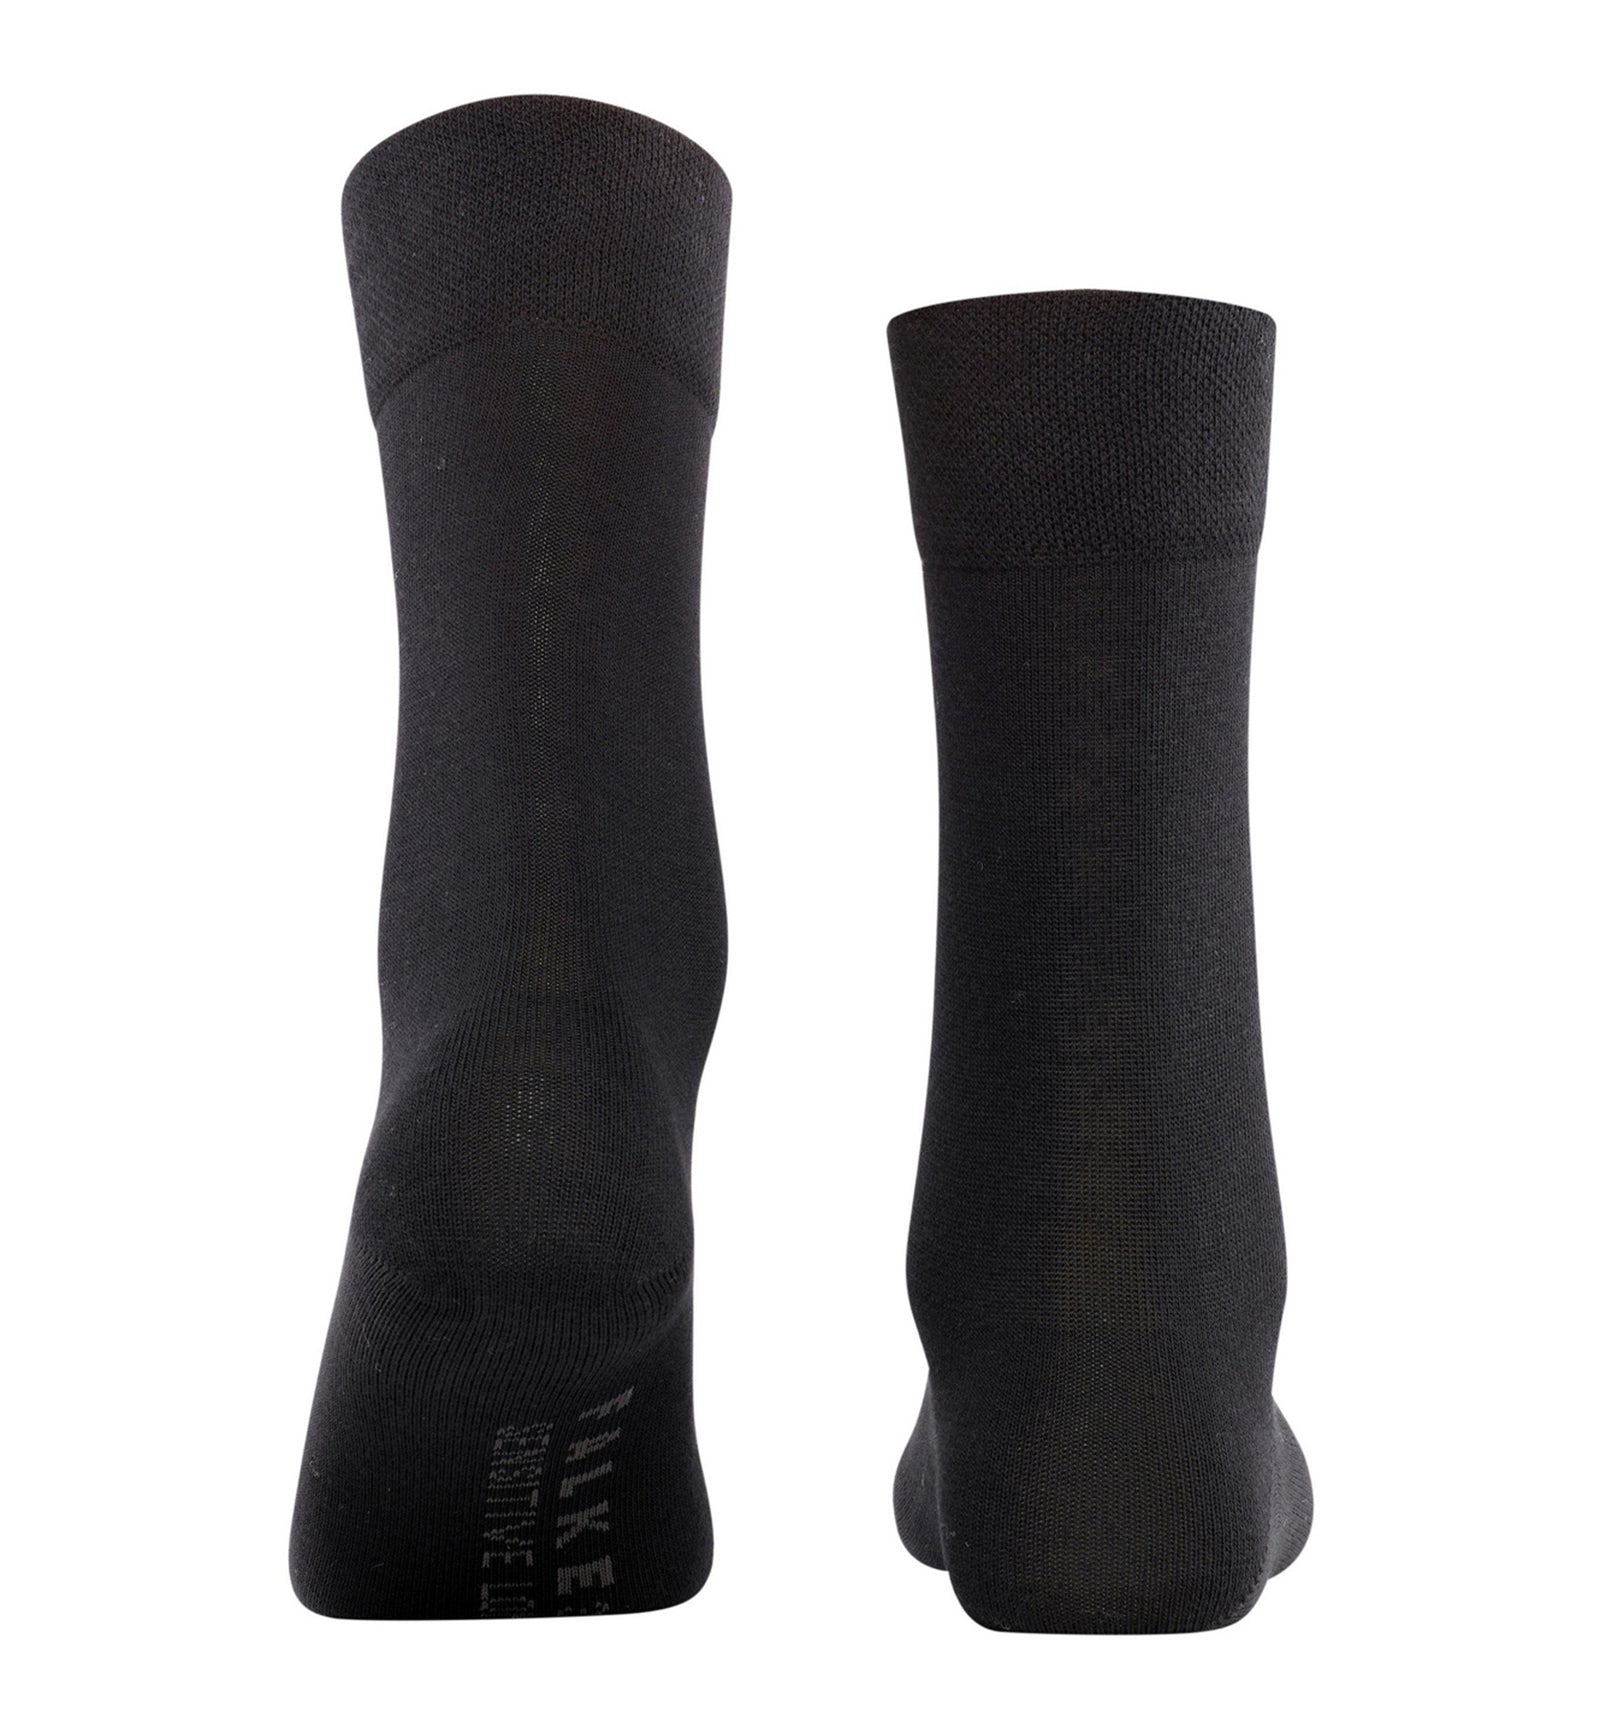 FALKE Sensitive London Crew Socks (46472),5/7.5,Black - Black,5/7.5